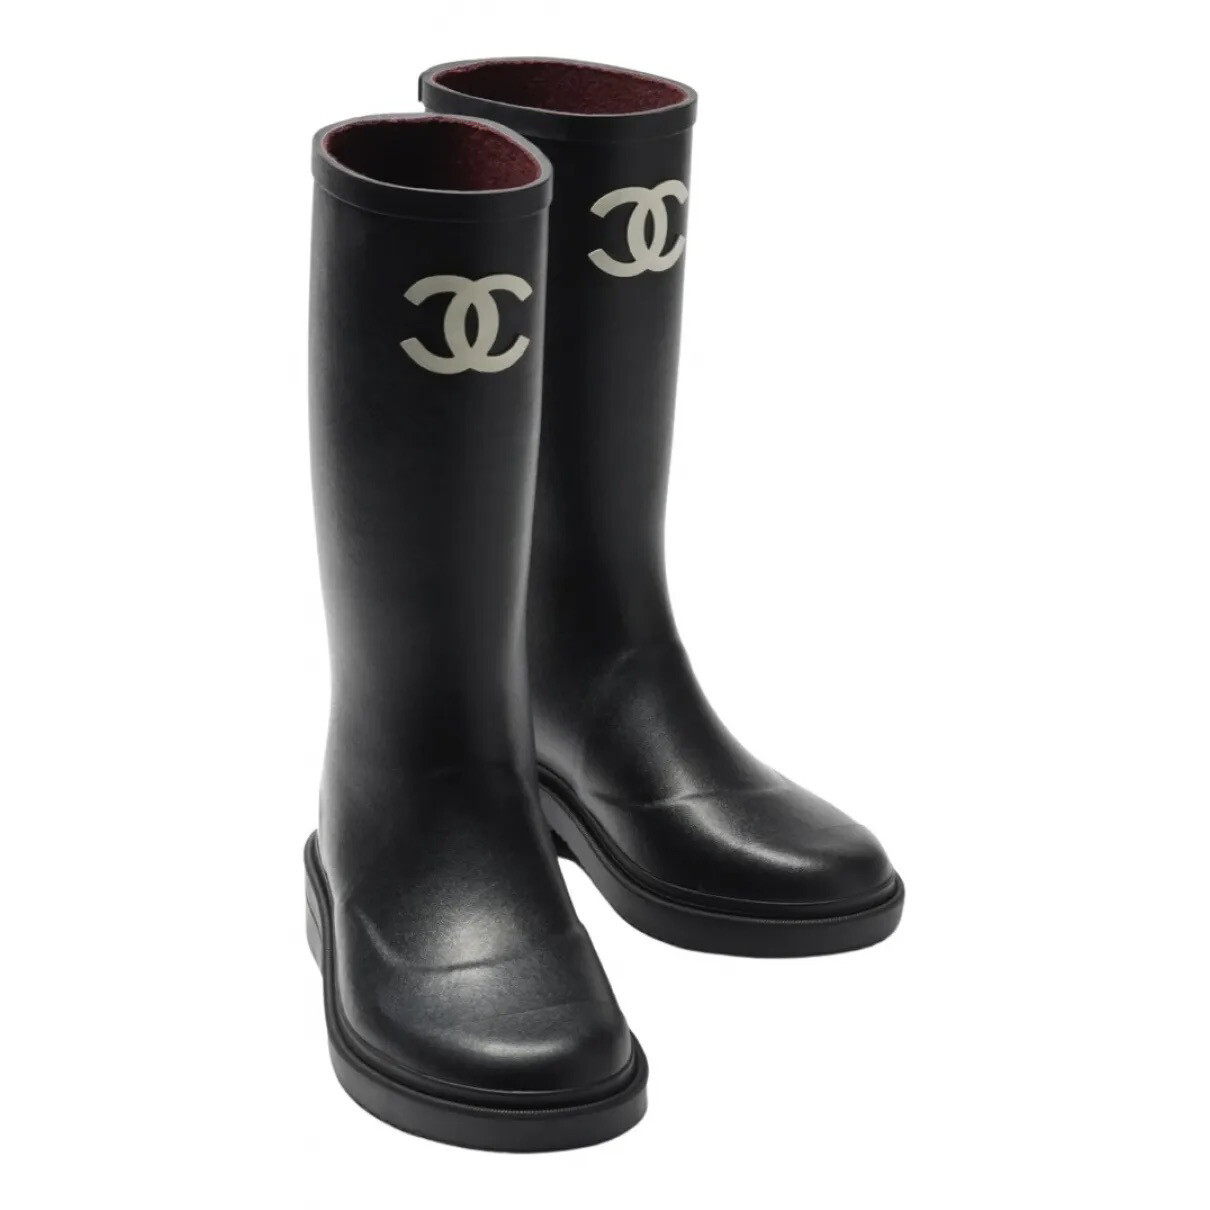 Chanel Rain Boots Wellies, Size 42 Black And White, New In Box, WA001